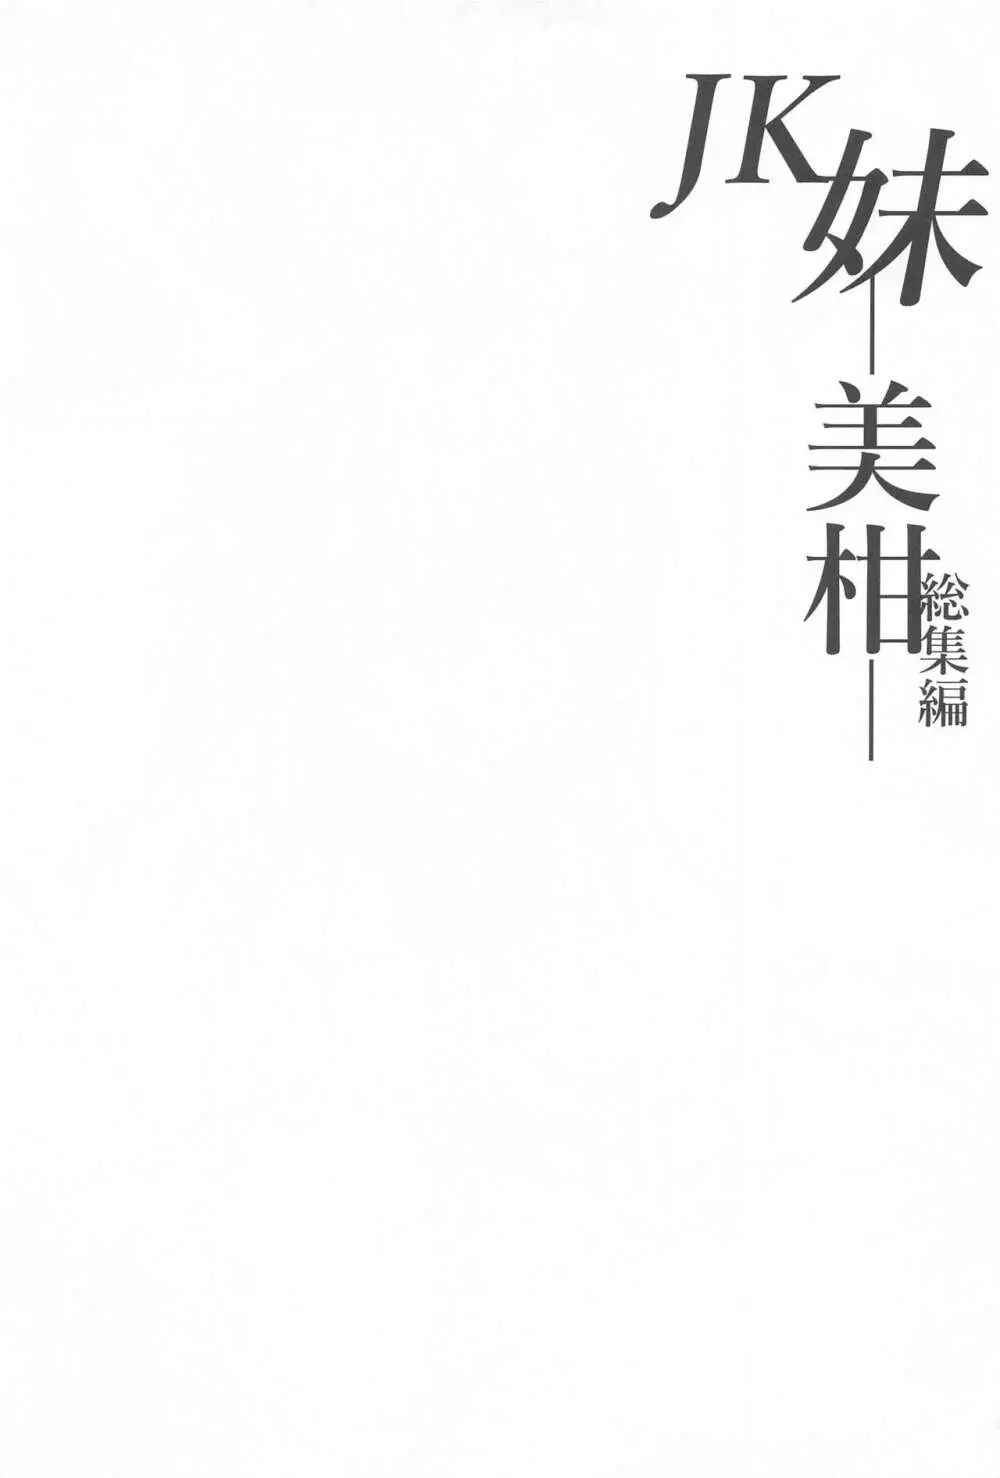 JK妹 ‐美柑‐ 総集編 14ページ